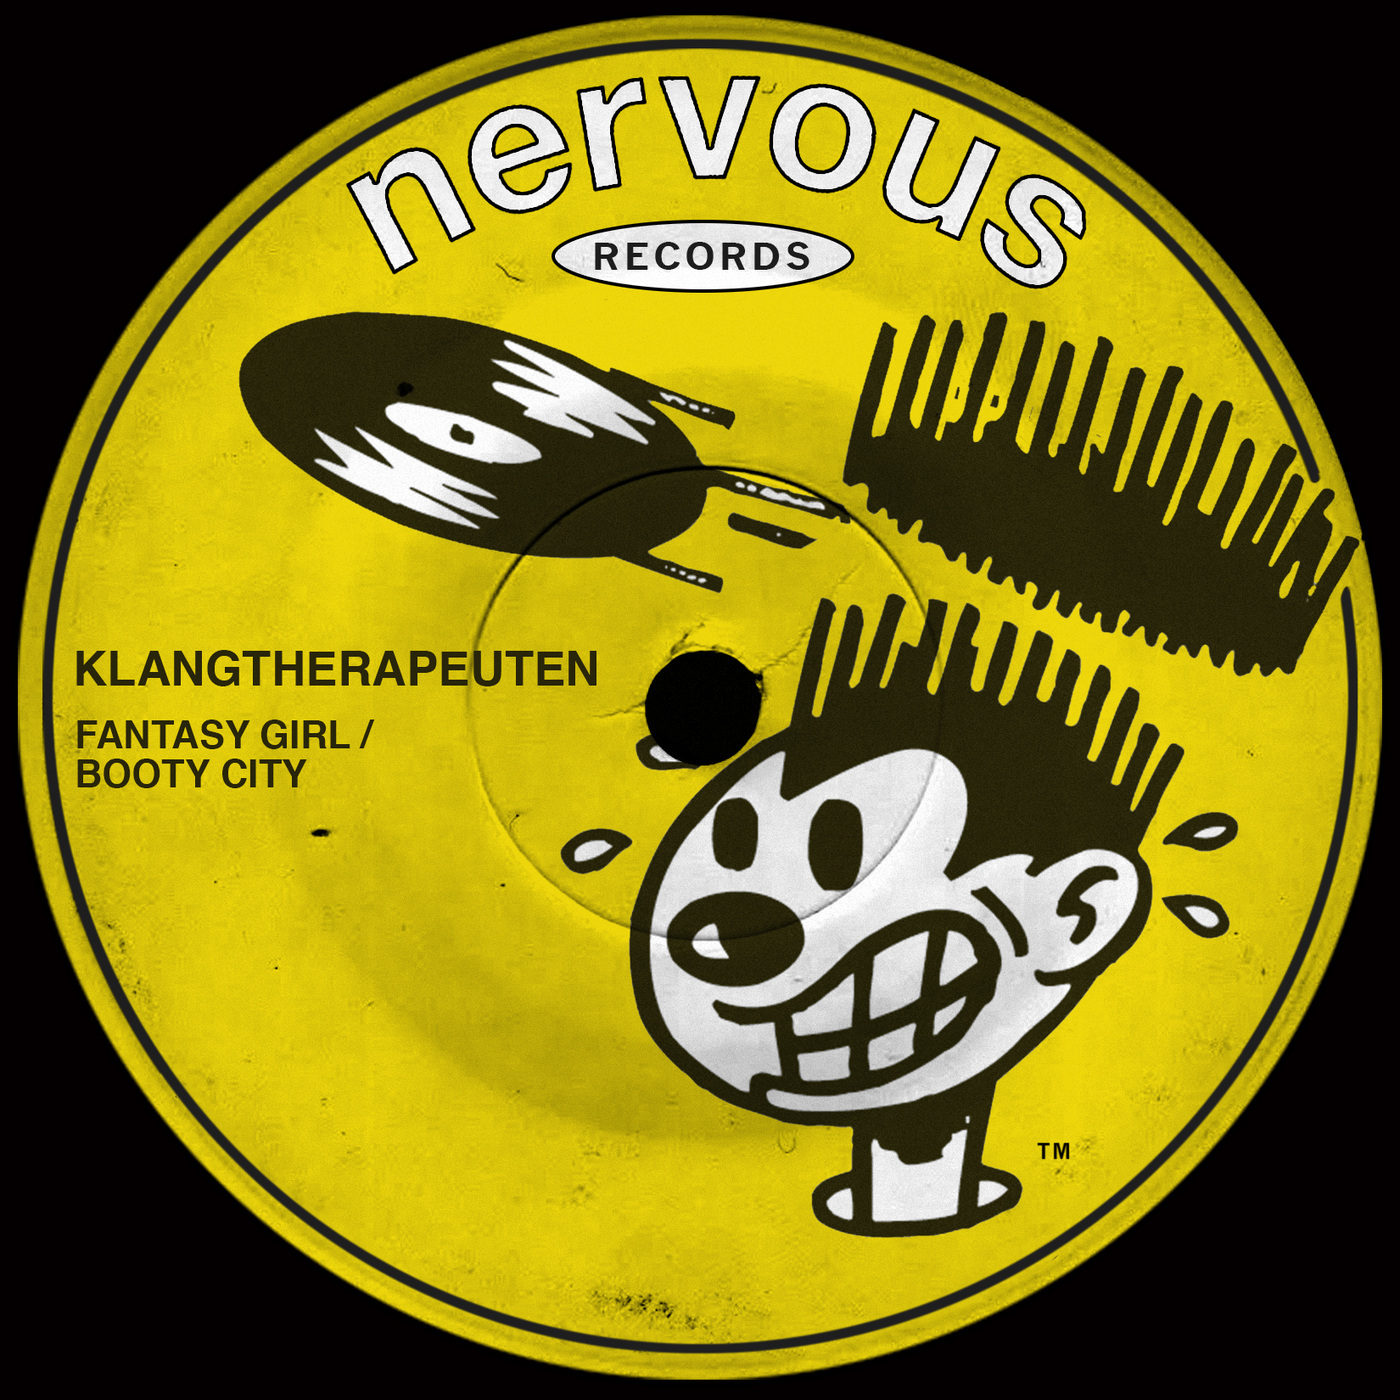 KlangTherapeuten - Fantasy Girl / Booty City / Nervous Records